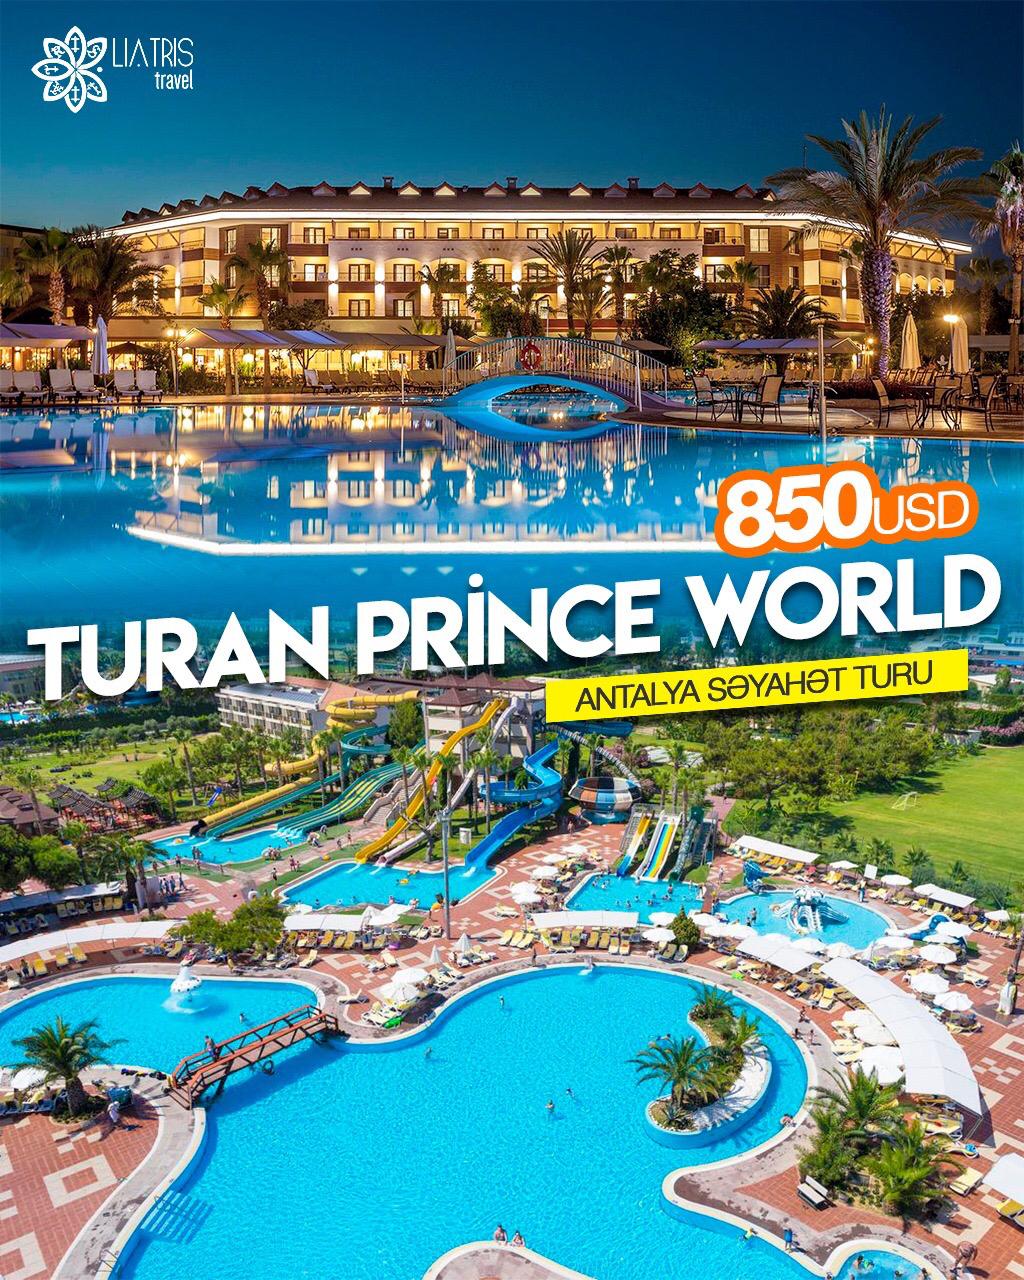 TURAN PRINCE WORLD 5*